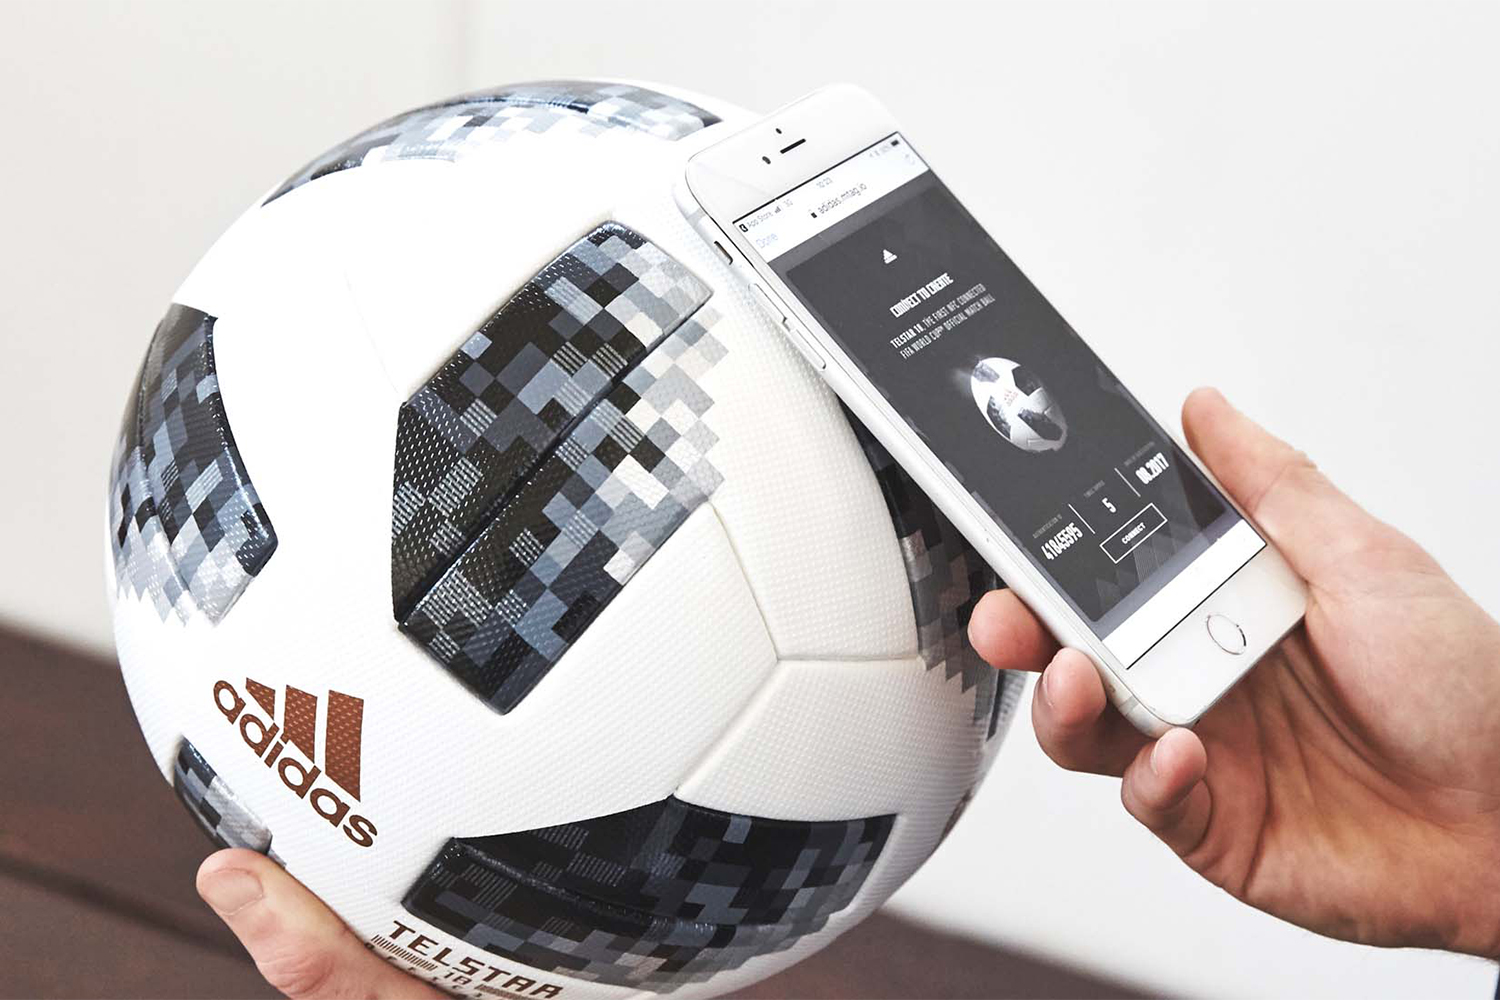 Así es balón Telstar 18 Adidas y Blue Bite | Digital Trends Español